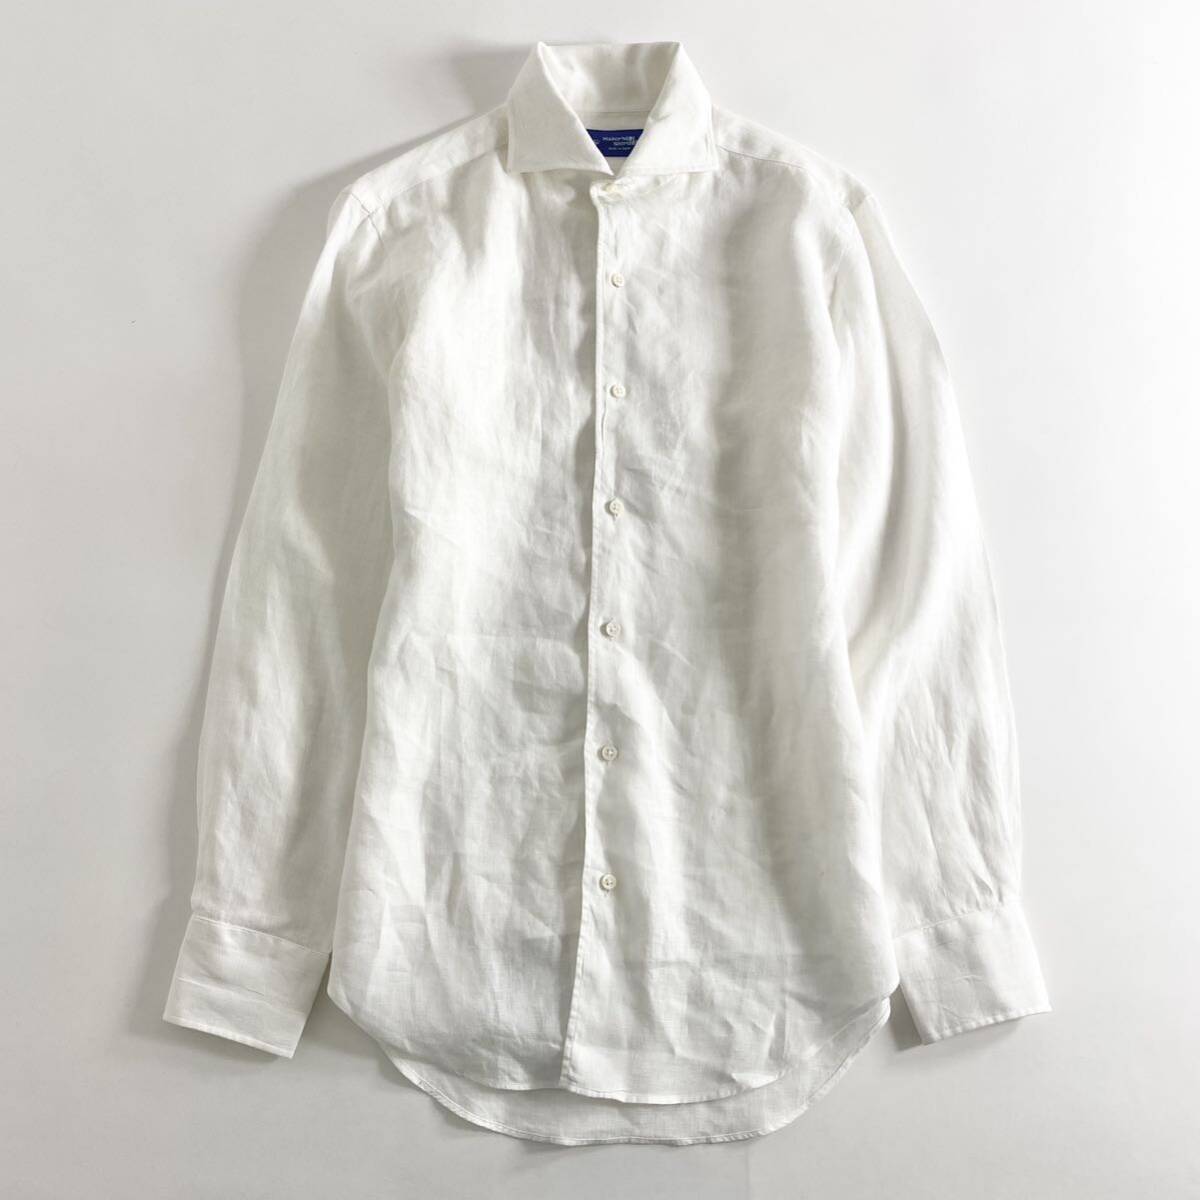 Dd30 Maker's Shirt メーガーズシャツ 鎌倉シャツ 長袖 シャツ リネン前開き 14 1/2（XL相当）麻100% ホワイトメンズ 紳士服_画像1